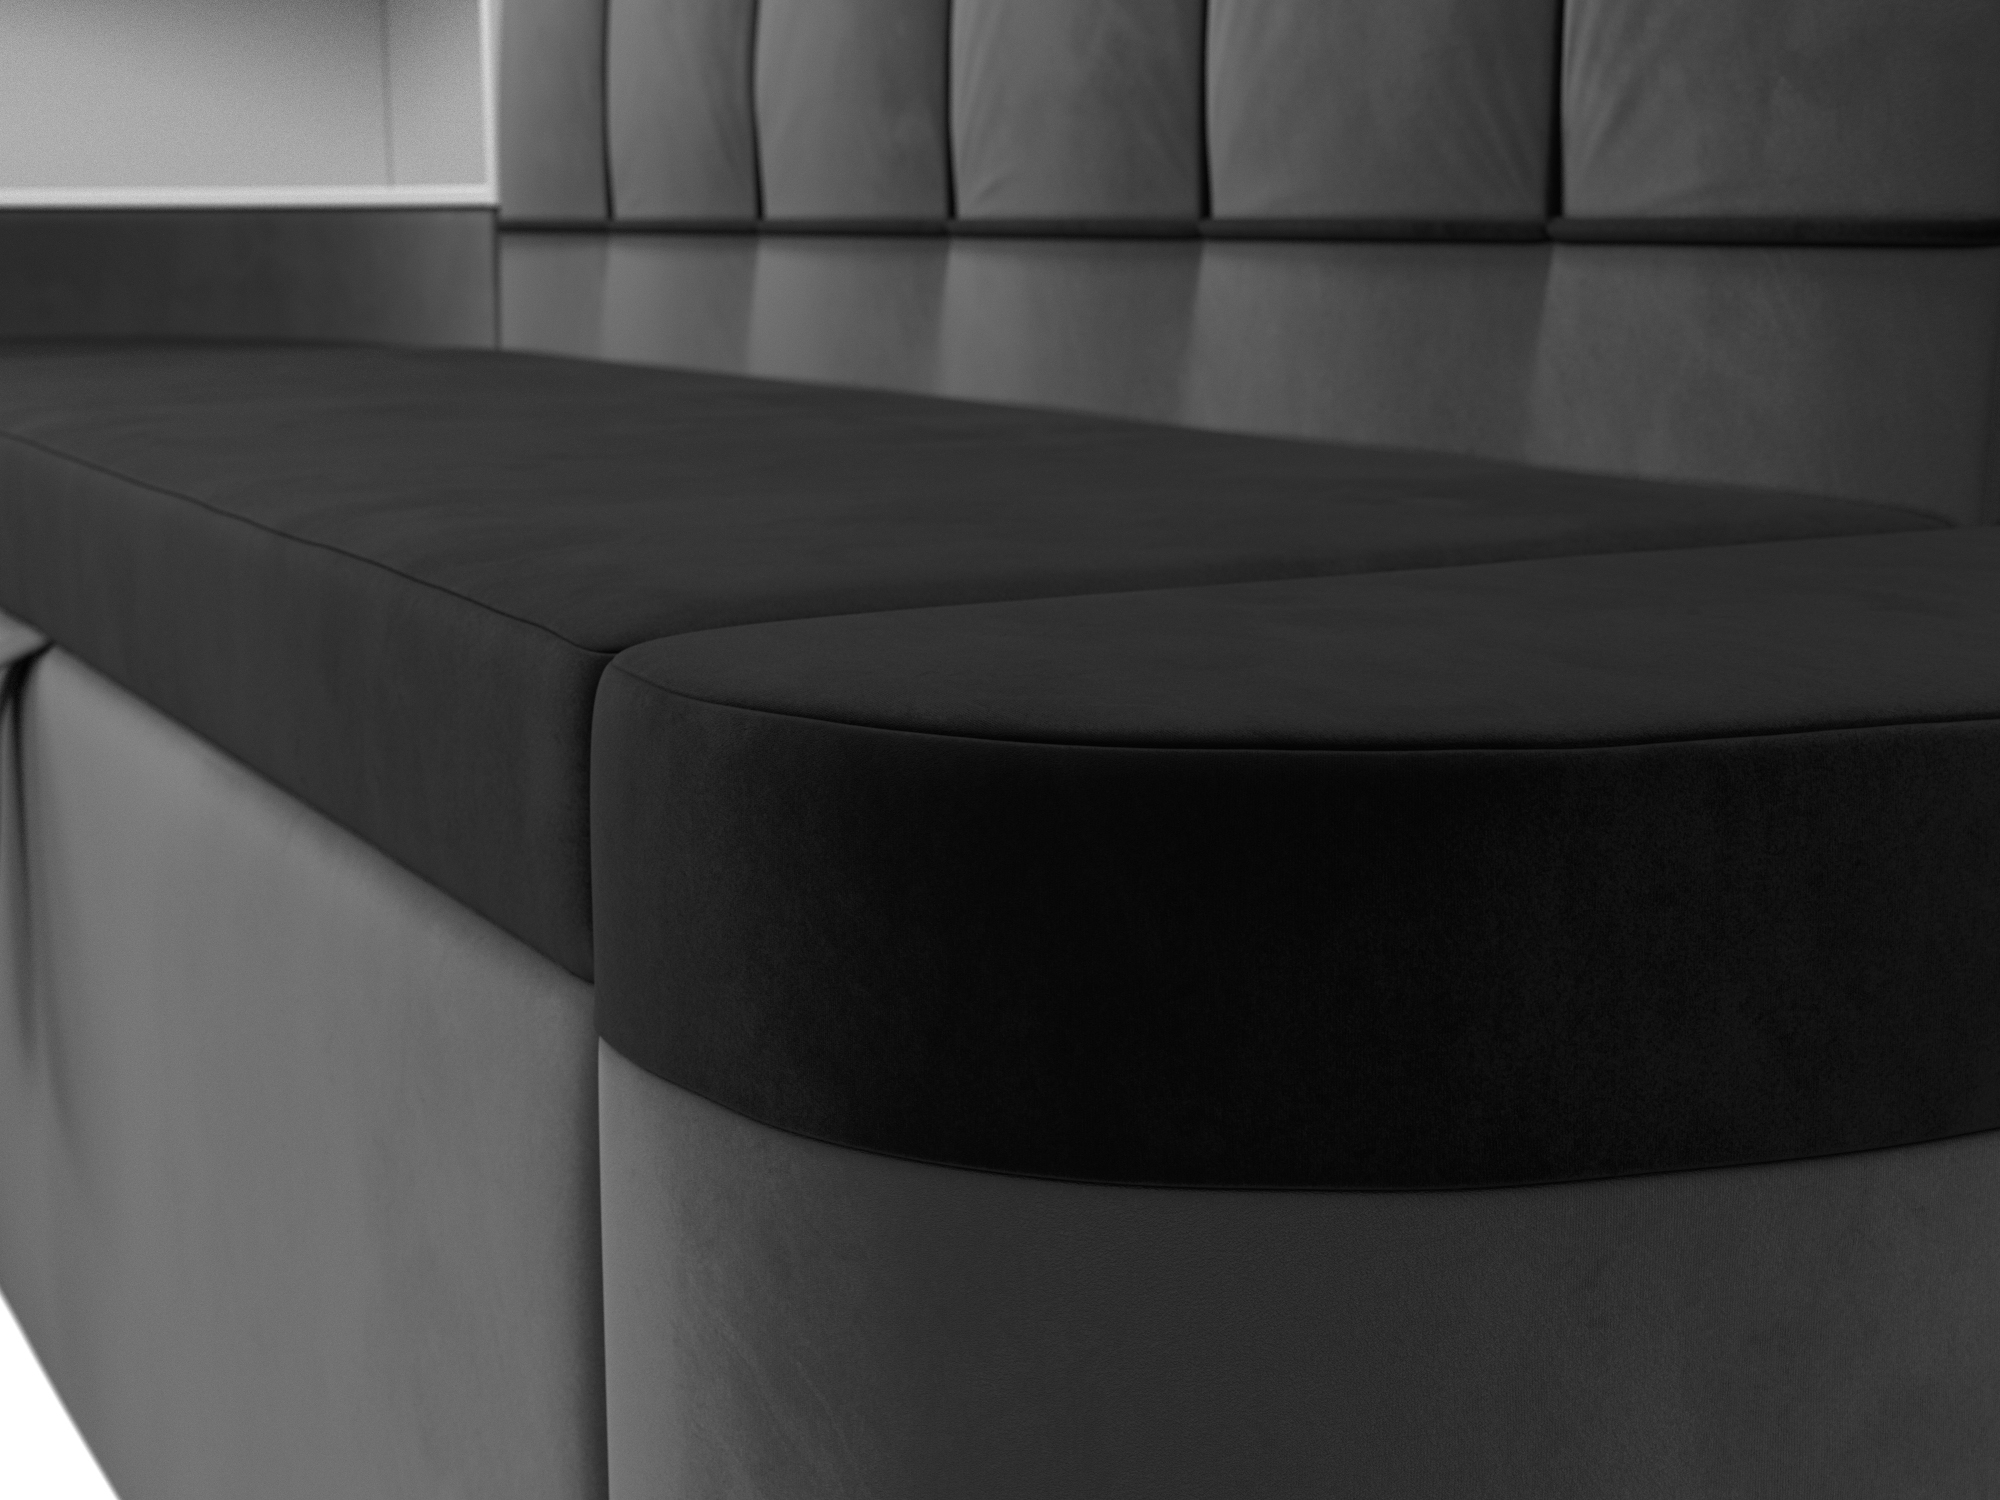 Кухонный угловой диван Тефида левый угол (черный\серый)